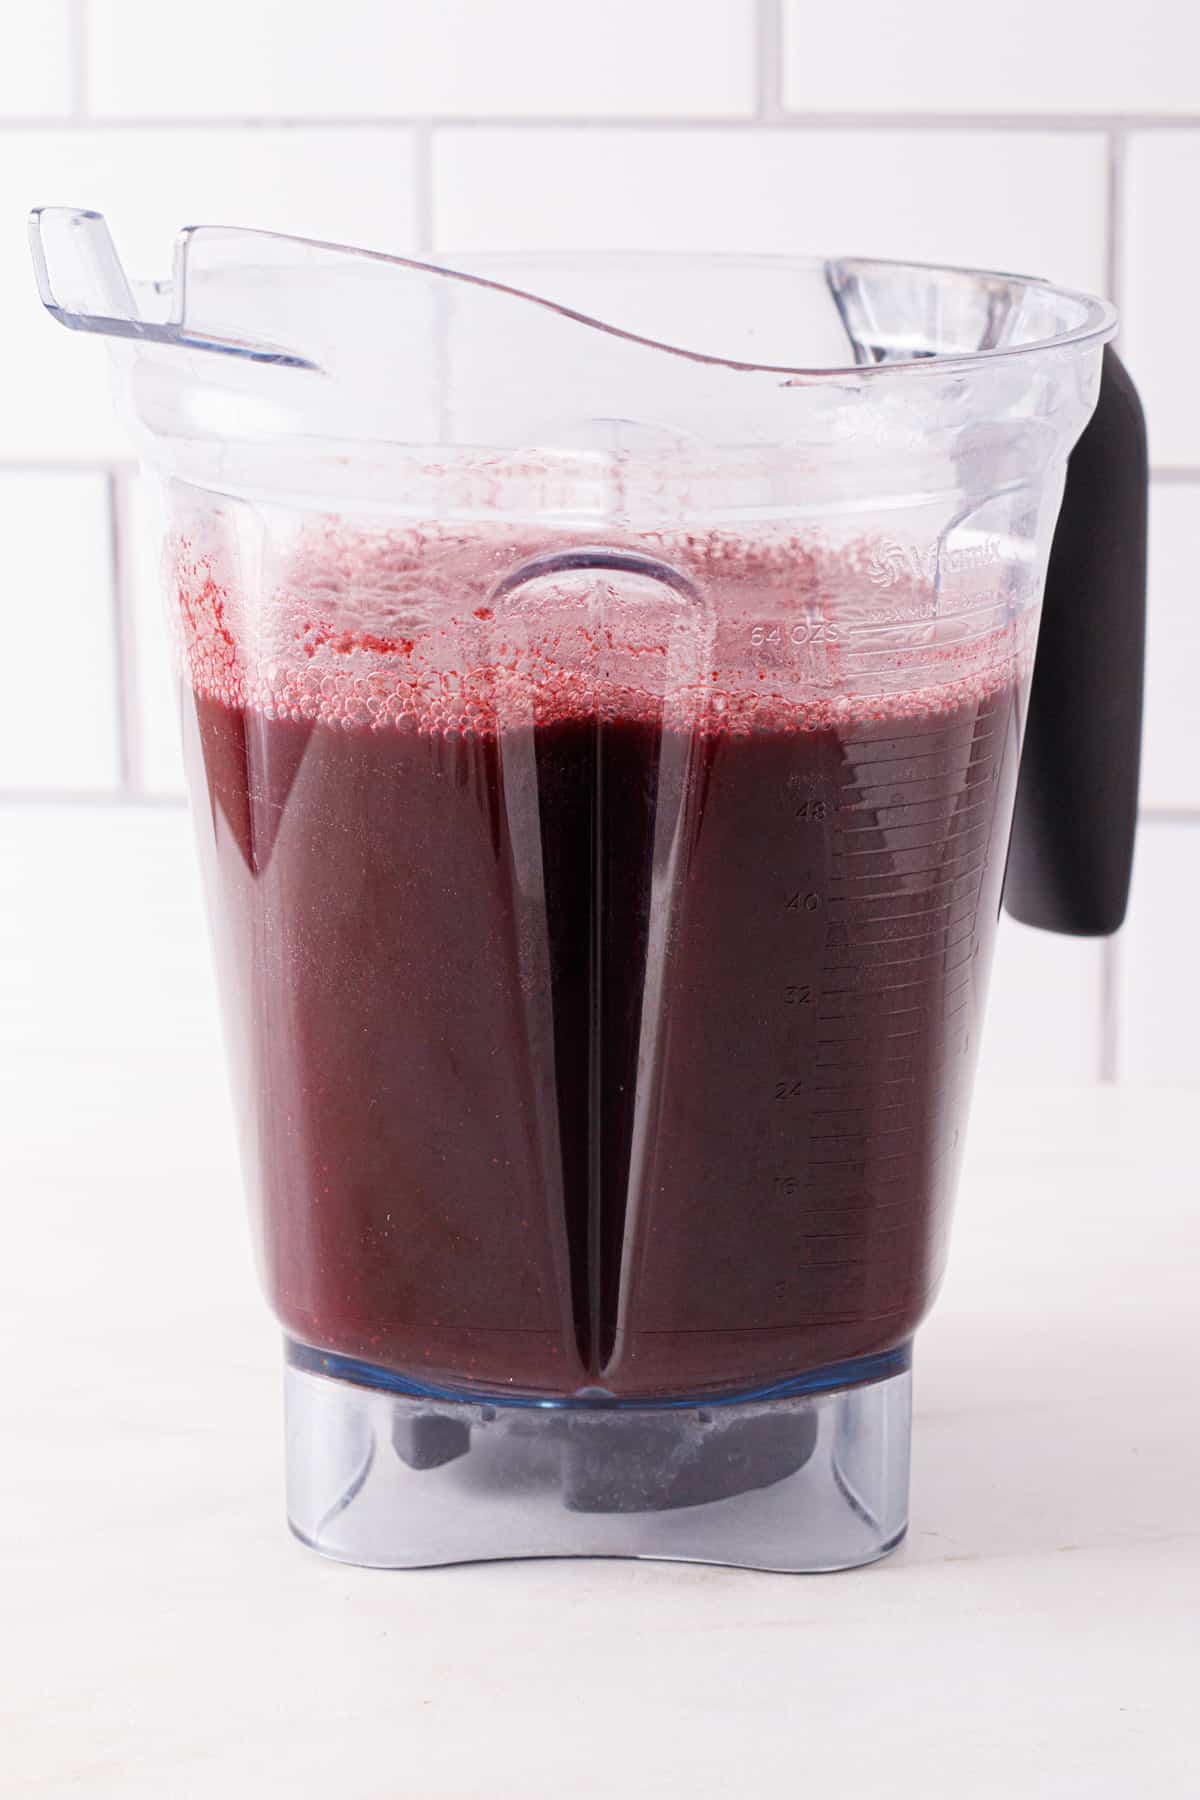 Blueberry juice in a blender.